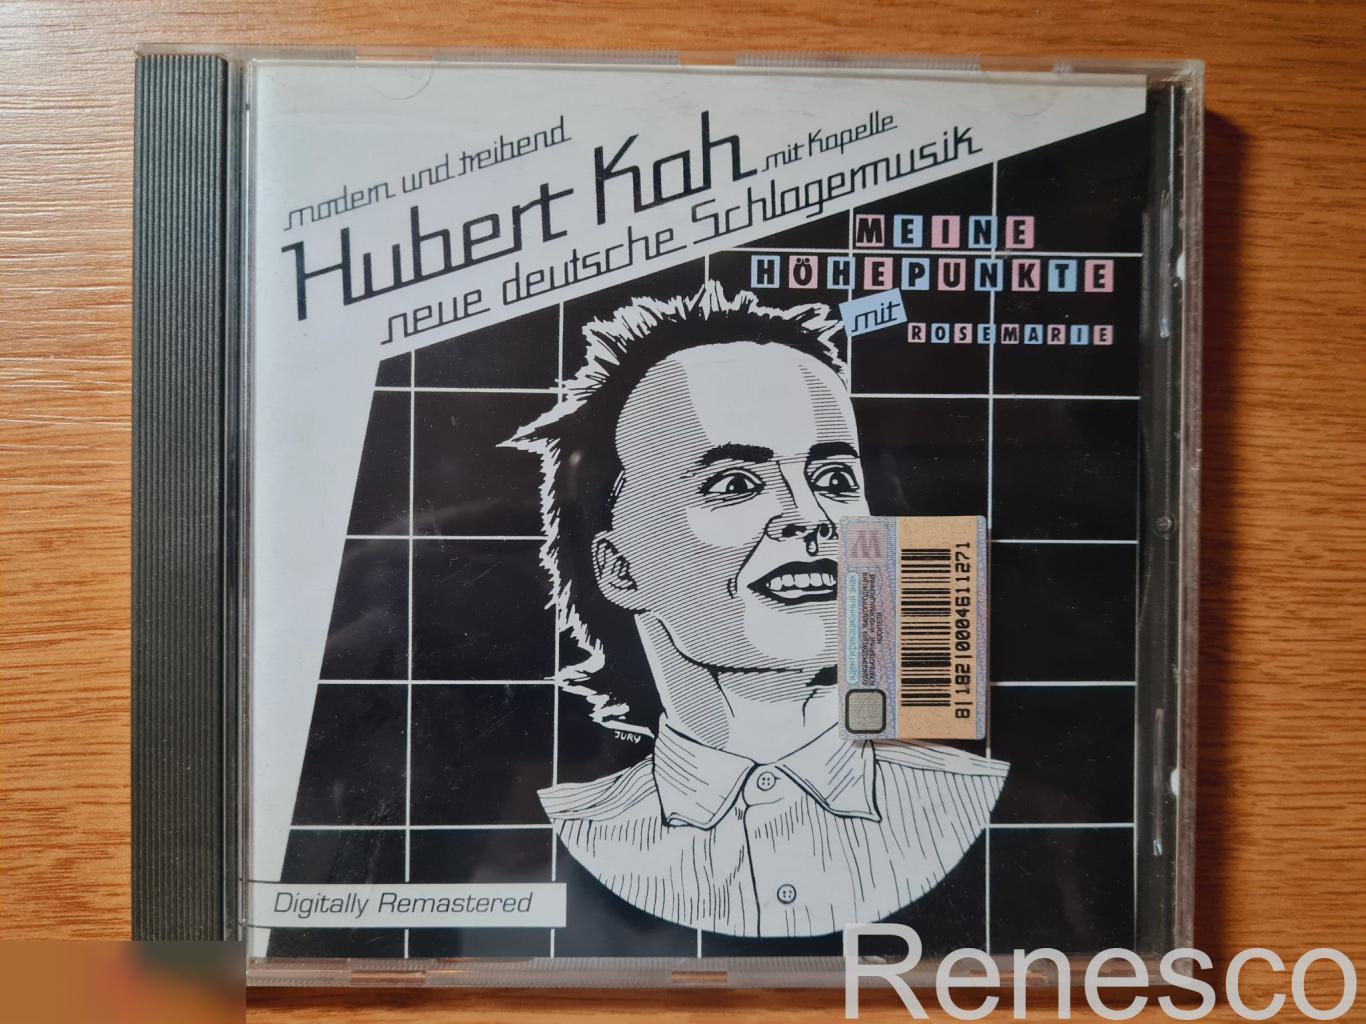 Hubert Kah Mit Kapelle – Meine Hohepunkte Mit Rosemarie (Germany) (1996) (Remast